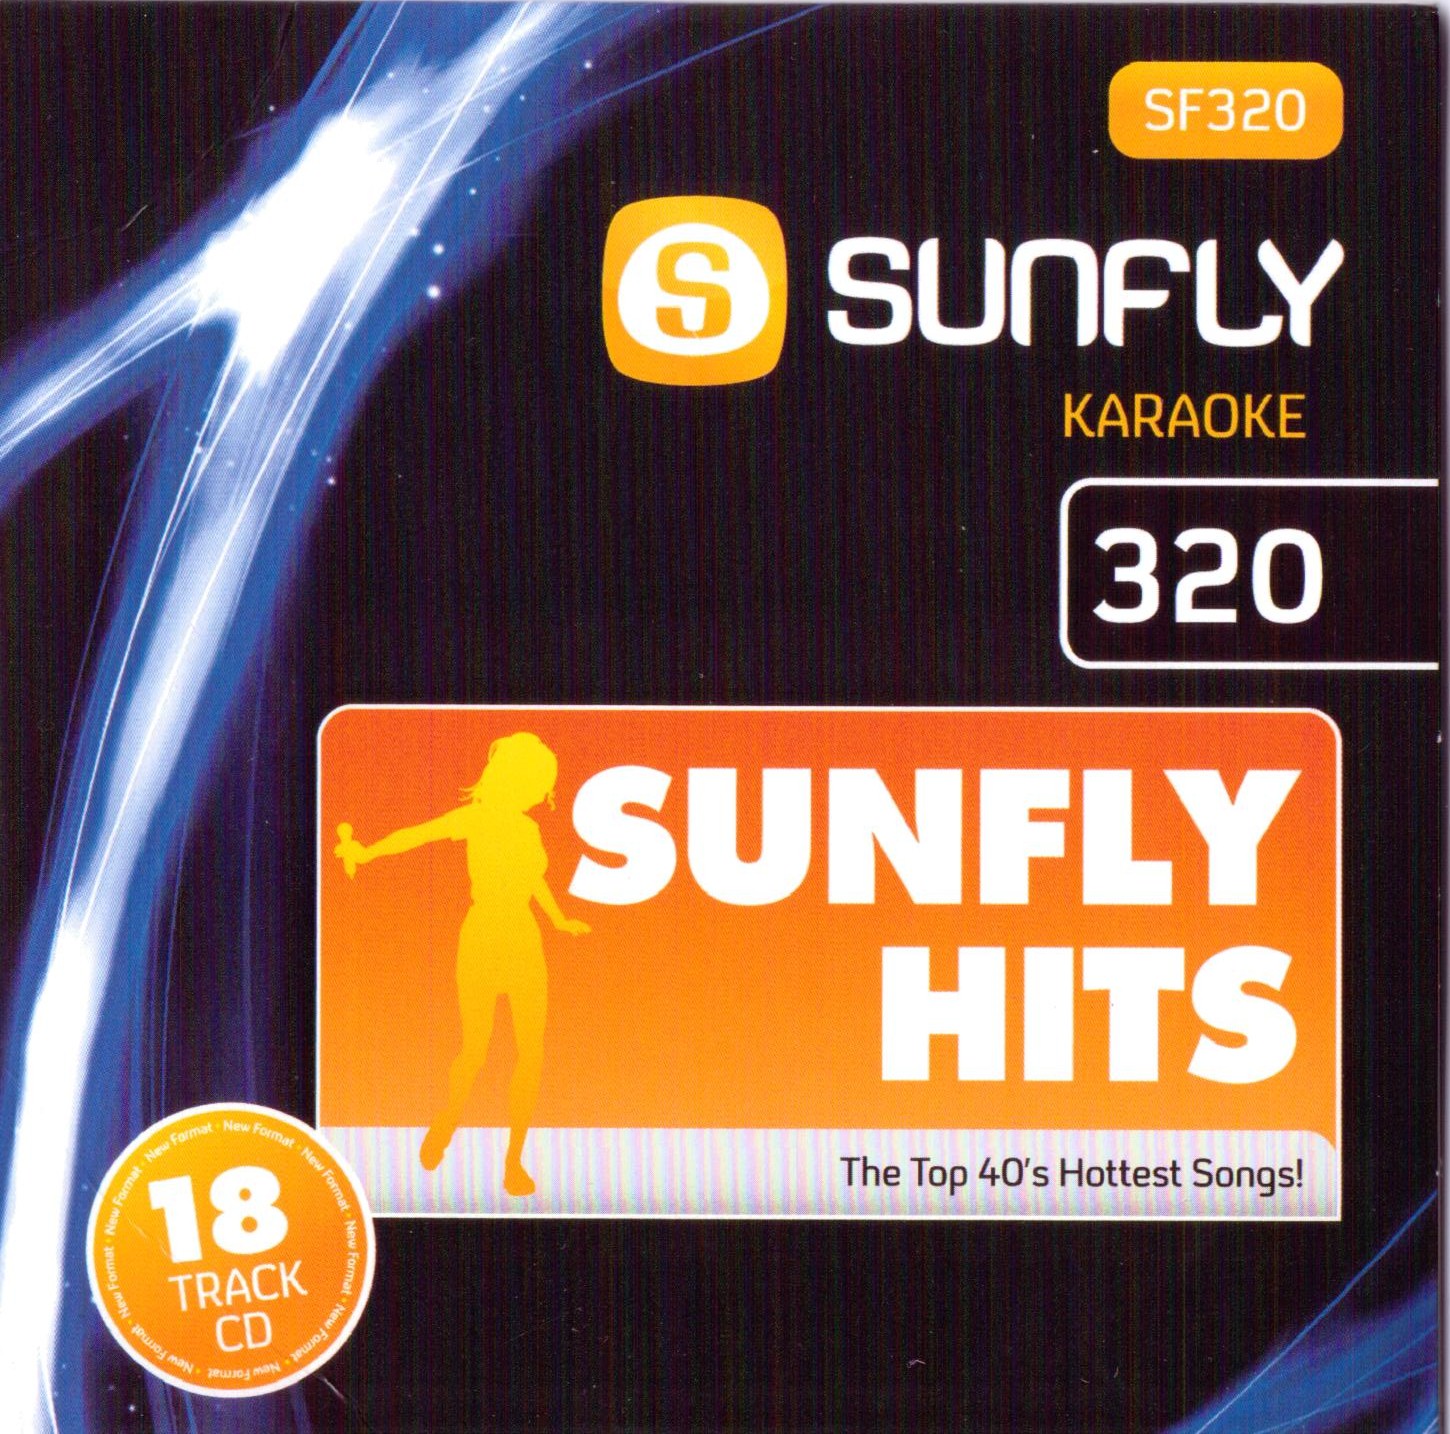 Latest Sunfly Karaoke Disc SF320 Added to Collection Jamie's Karaoke